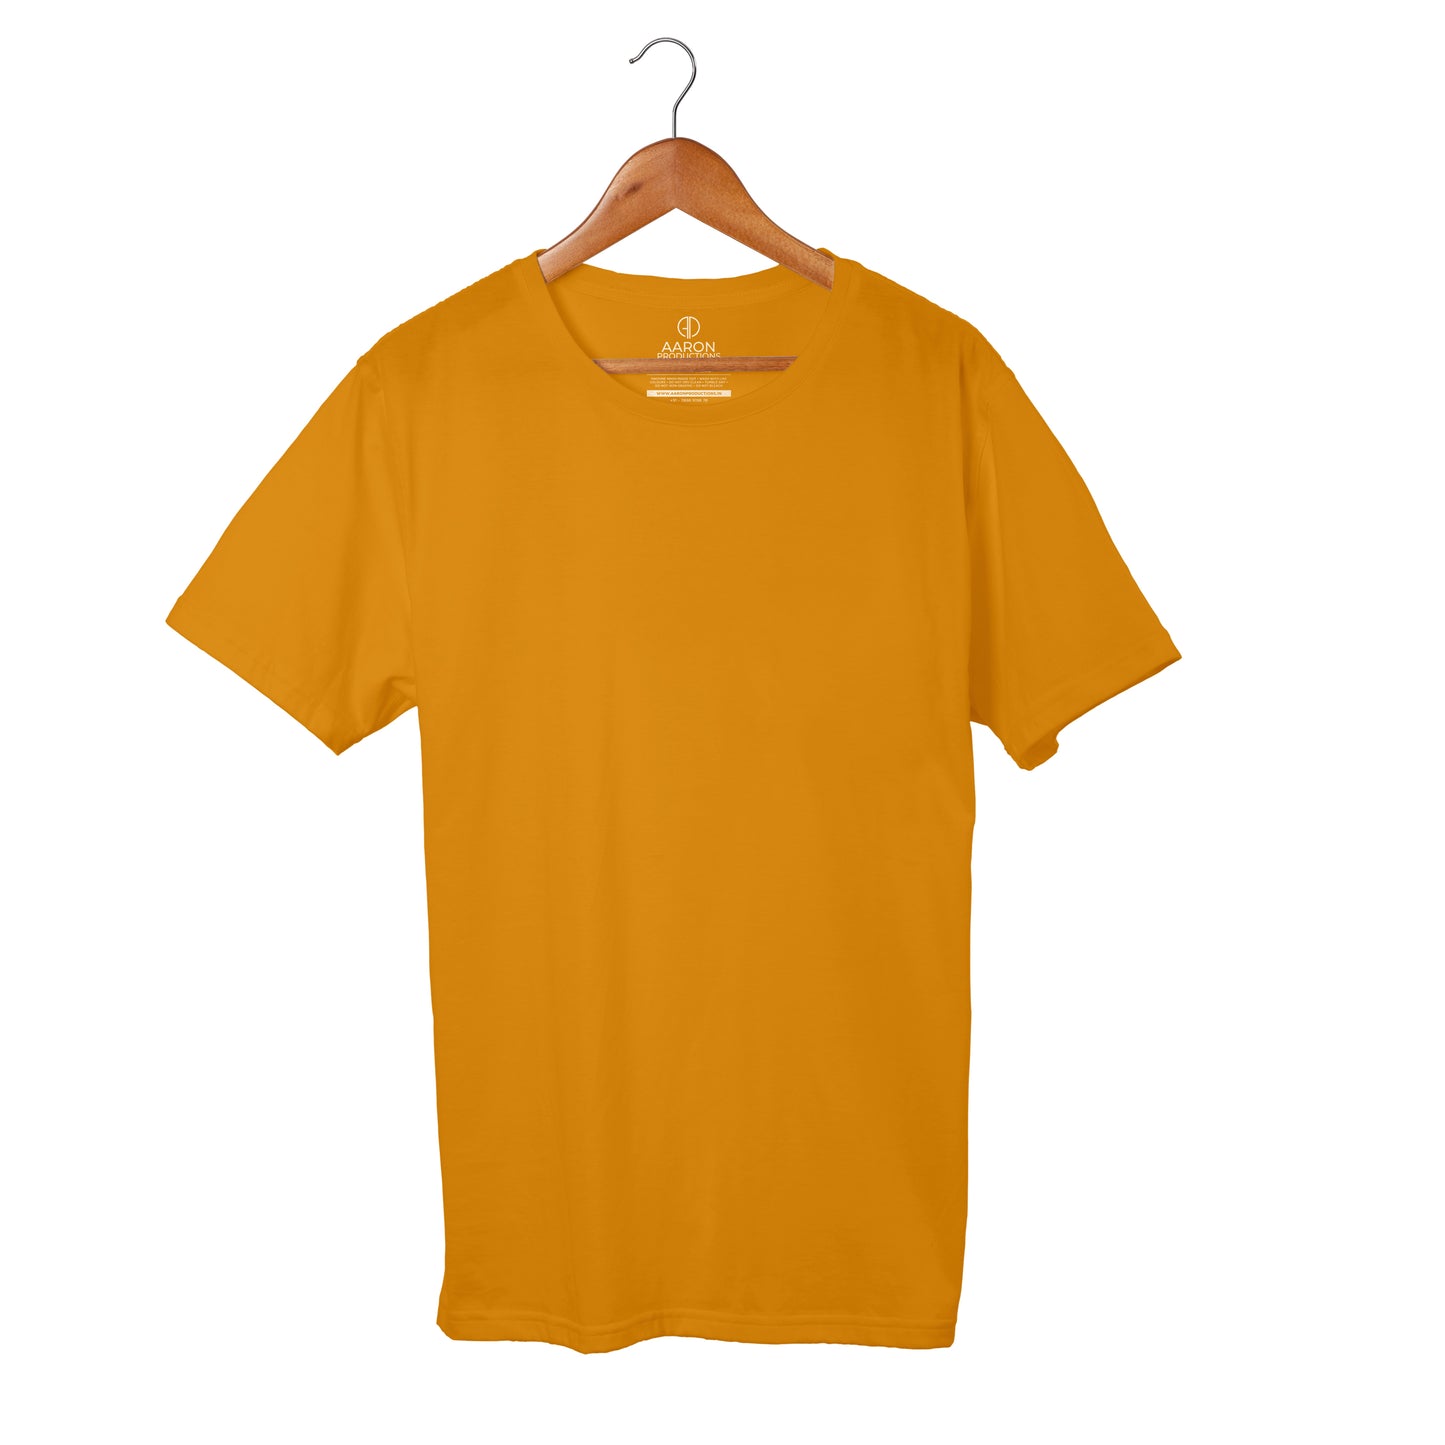 Mustard Yellow - Plain T-shirt Men